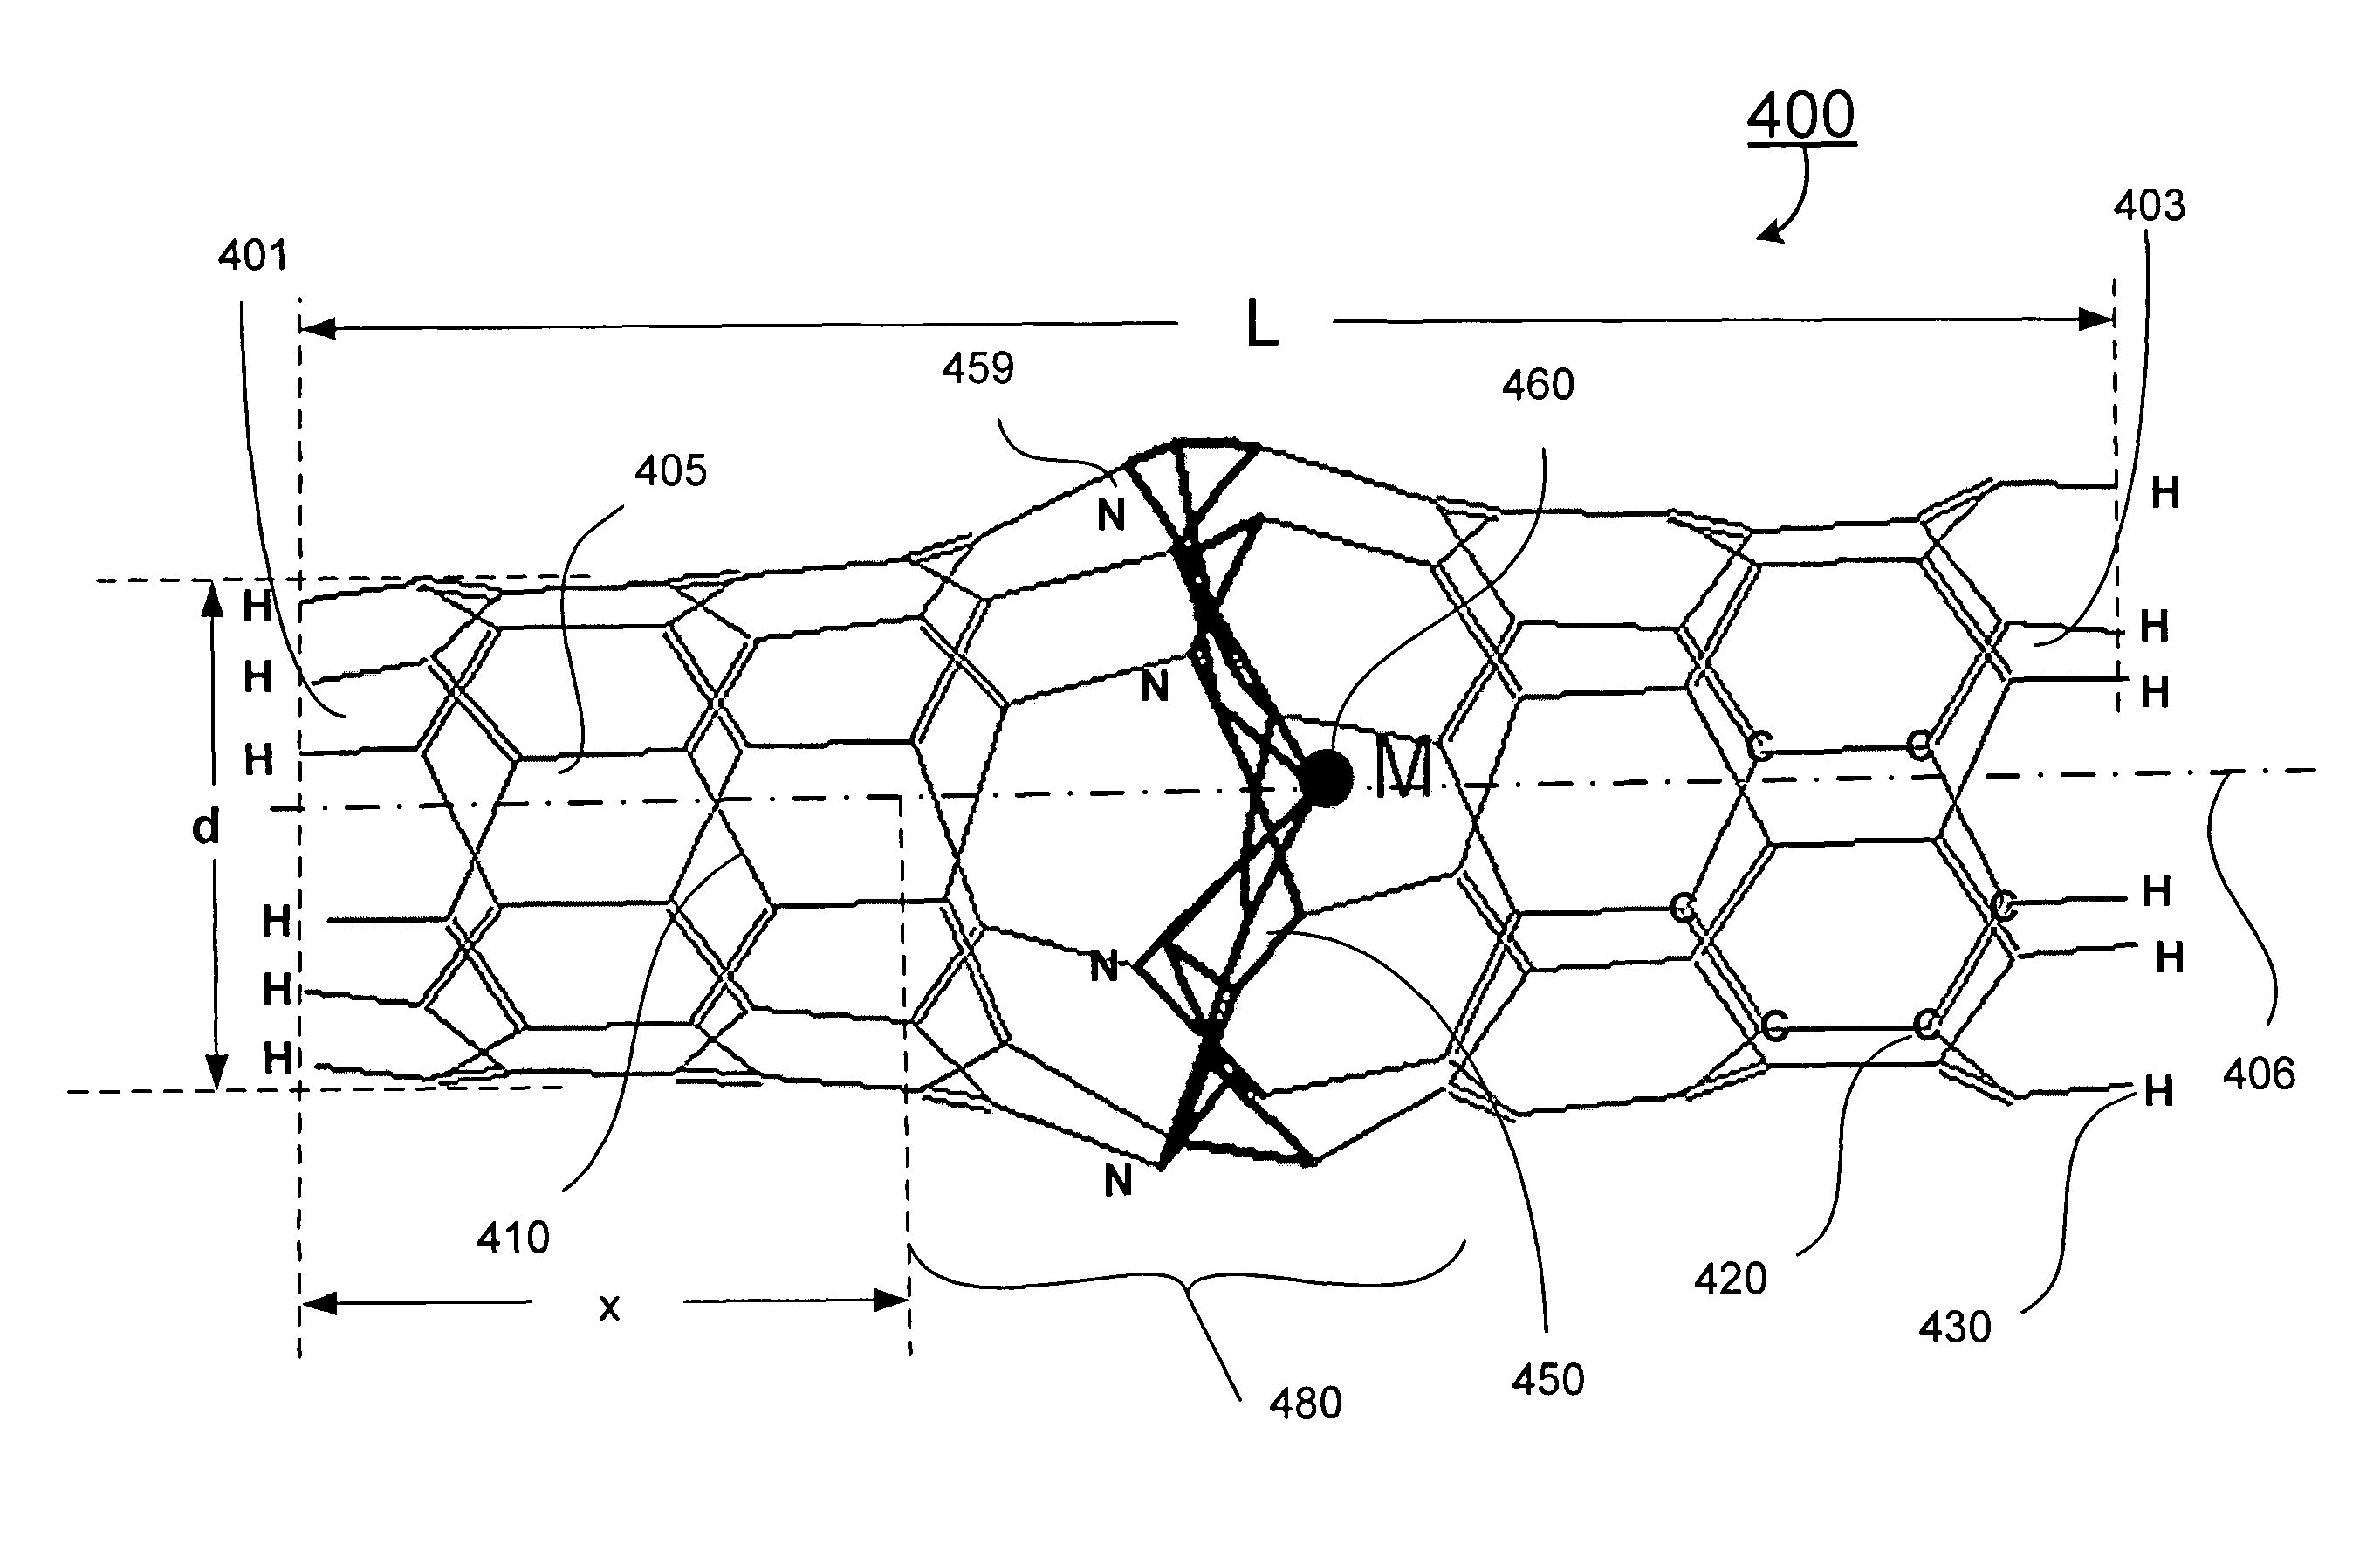 Nanotube-porphyrin molecular structure and applications of same